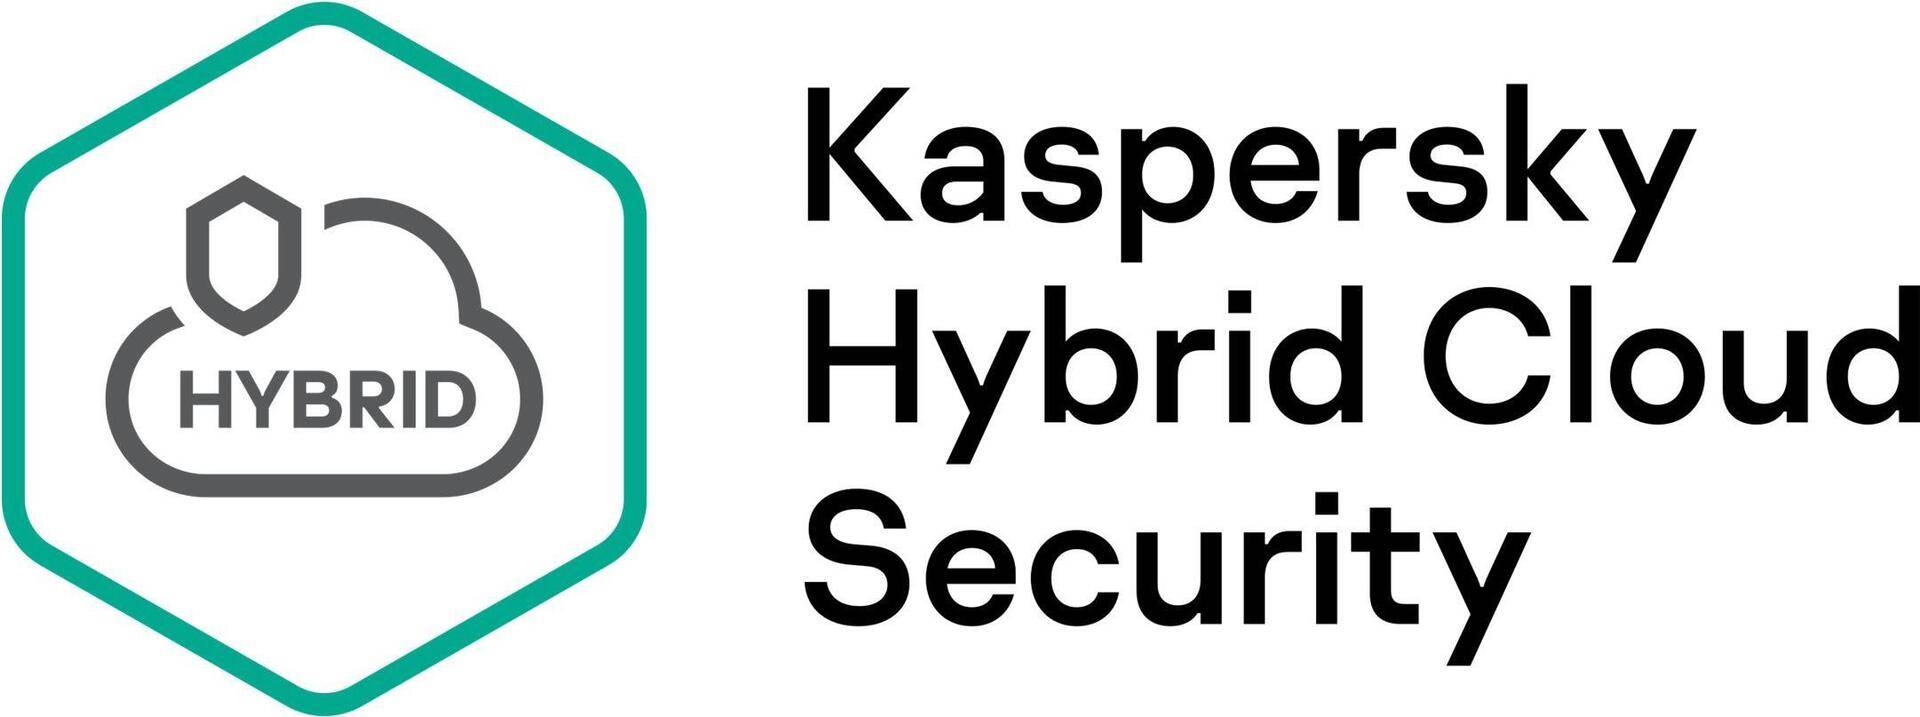 Kaspersky Hybrid Cloud Security Enterprise CPU European Edi. 150-249 CPU 2-Year Base License (KL4553XASDS) von Kaspersky Lab